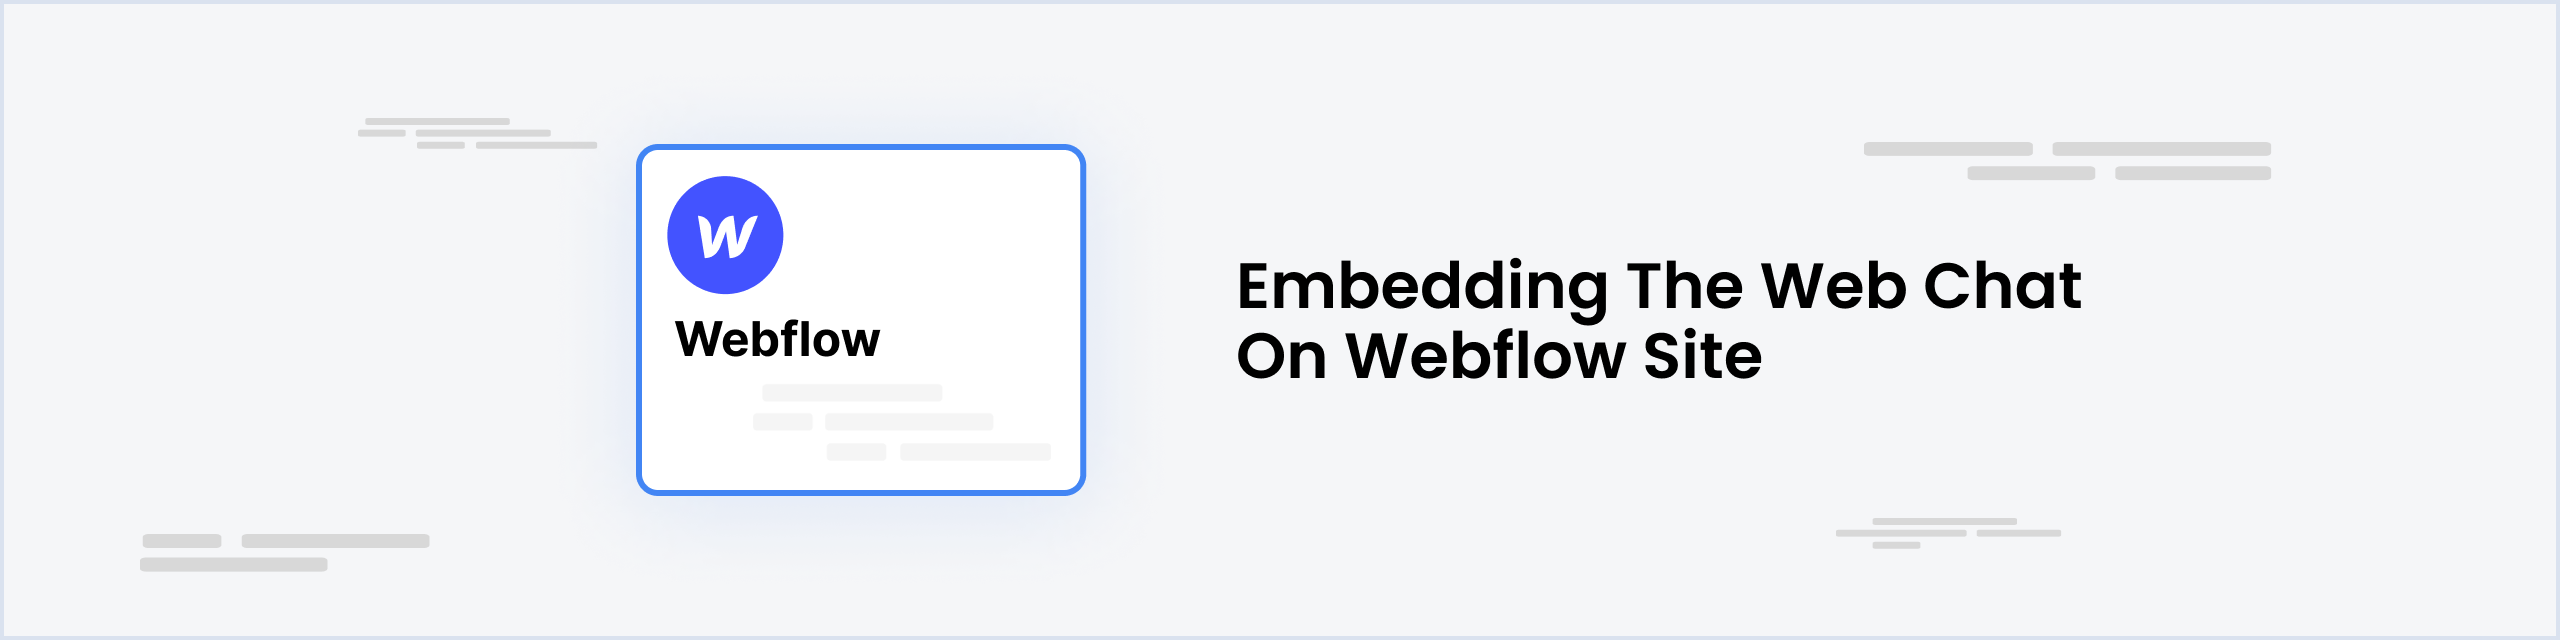 Webflow Banner